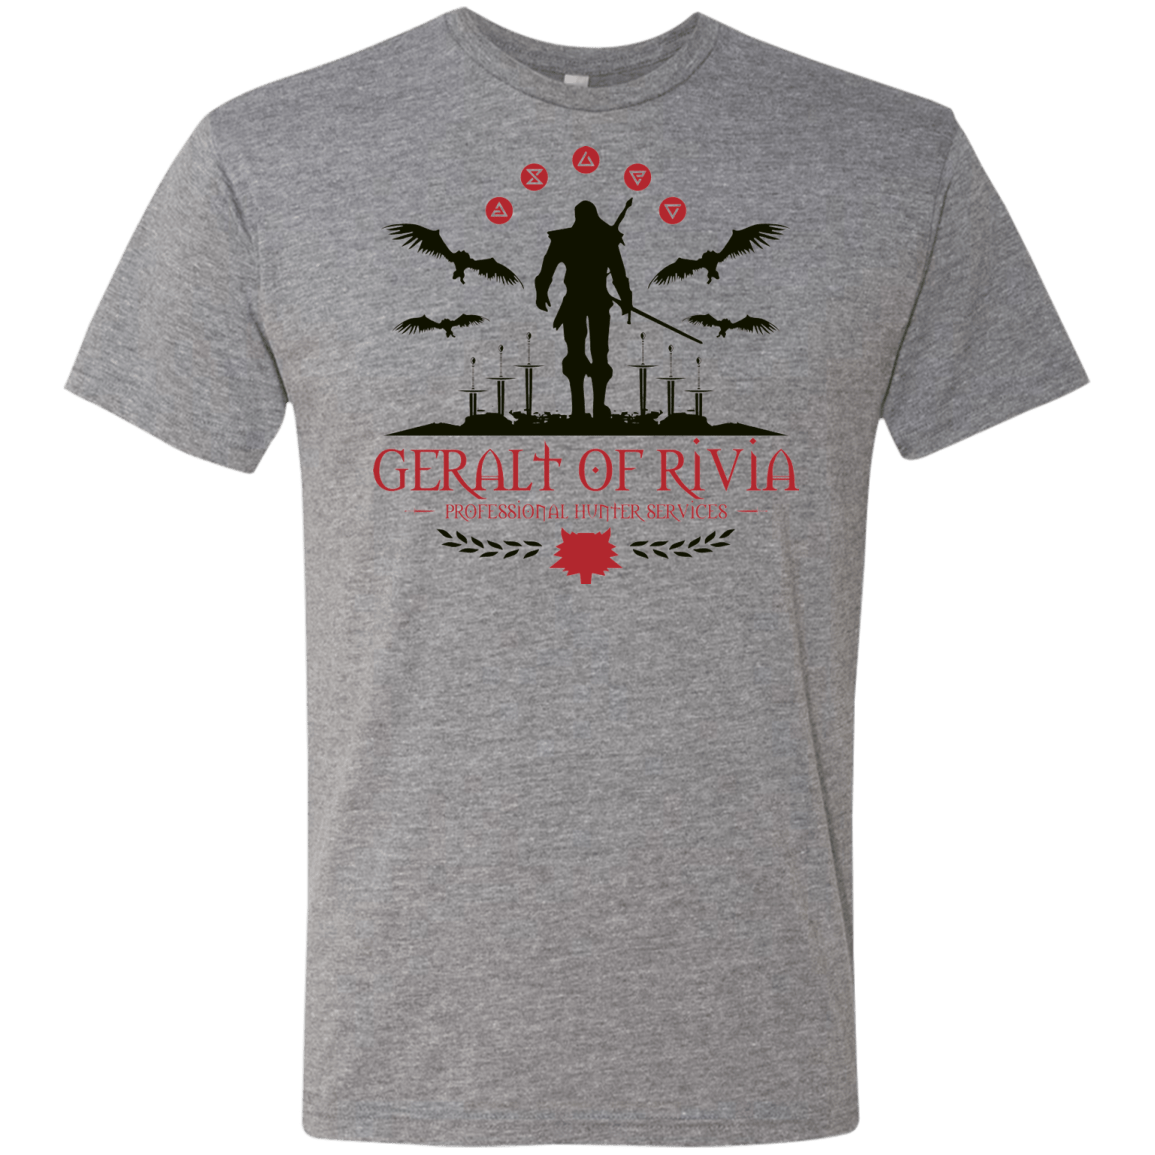 T-Shirts Premium Heather / Small The Witcher 3 Wild Hunt Men's Triblend T-Shirt